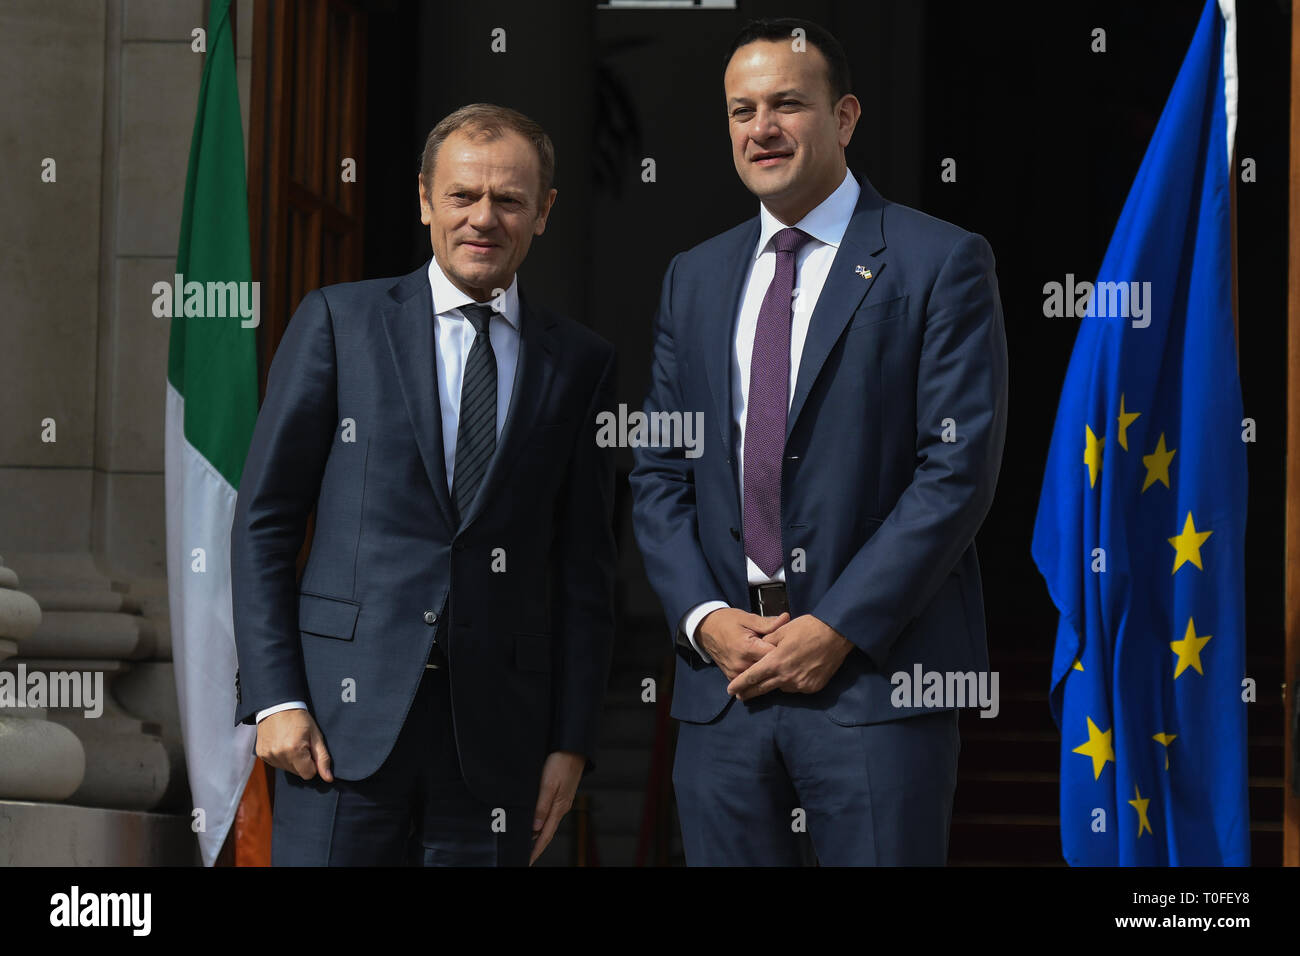 Dublin, Ireland. 19th Mar, 2019. European Council President Donald Tusk meets Taoiseach Leo Varadkar for Brexit talks, in Government Buildings in Dublin. Credit: ASWphoto/Alamy Live News Stock Photo